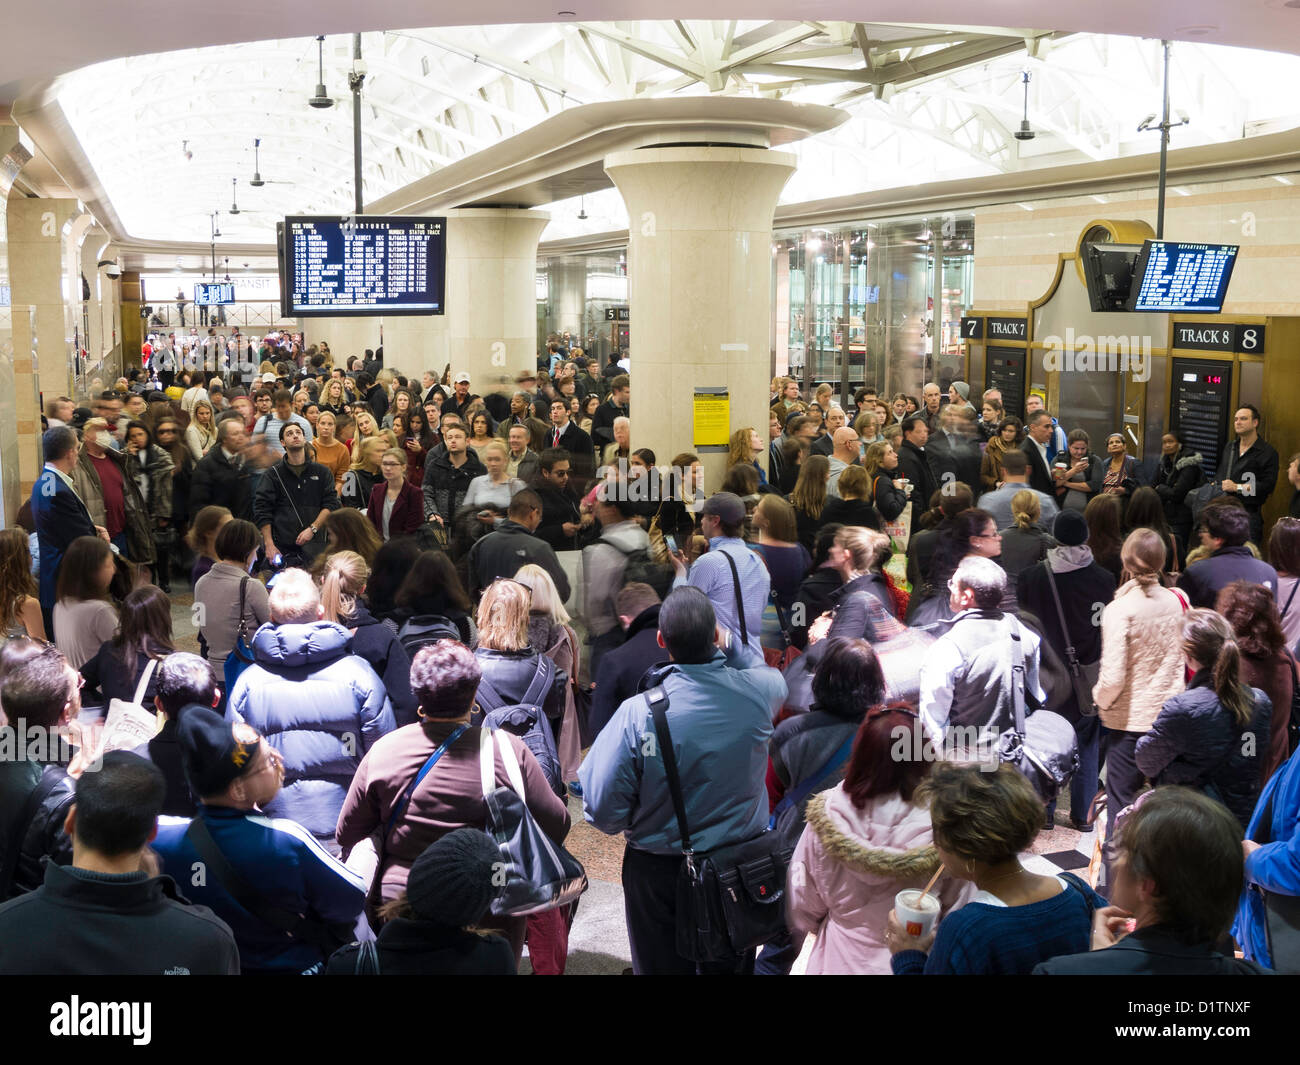 Crowds, New Jersey Transit Area, Penn Station, NYC  2012 Stock Photo